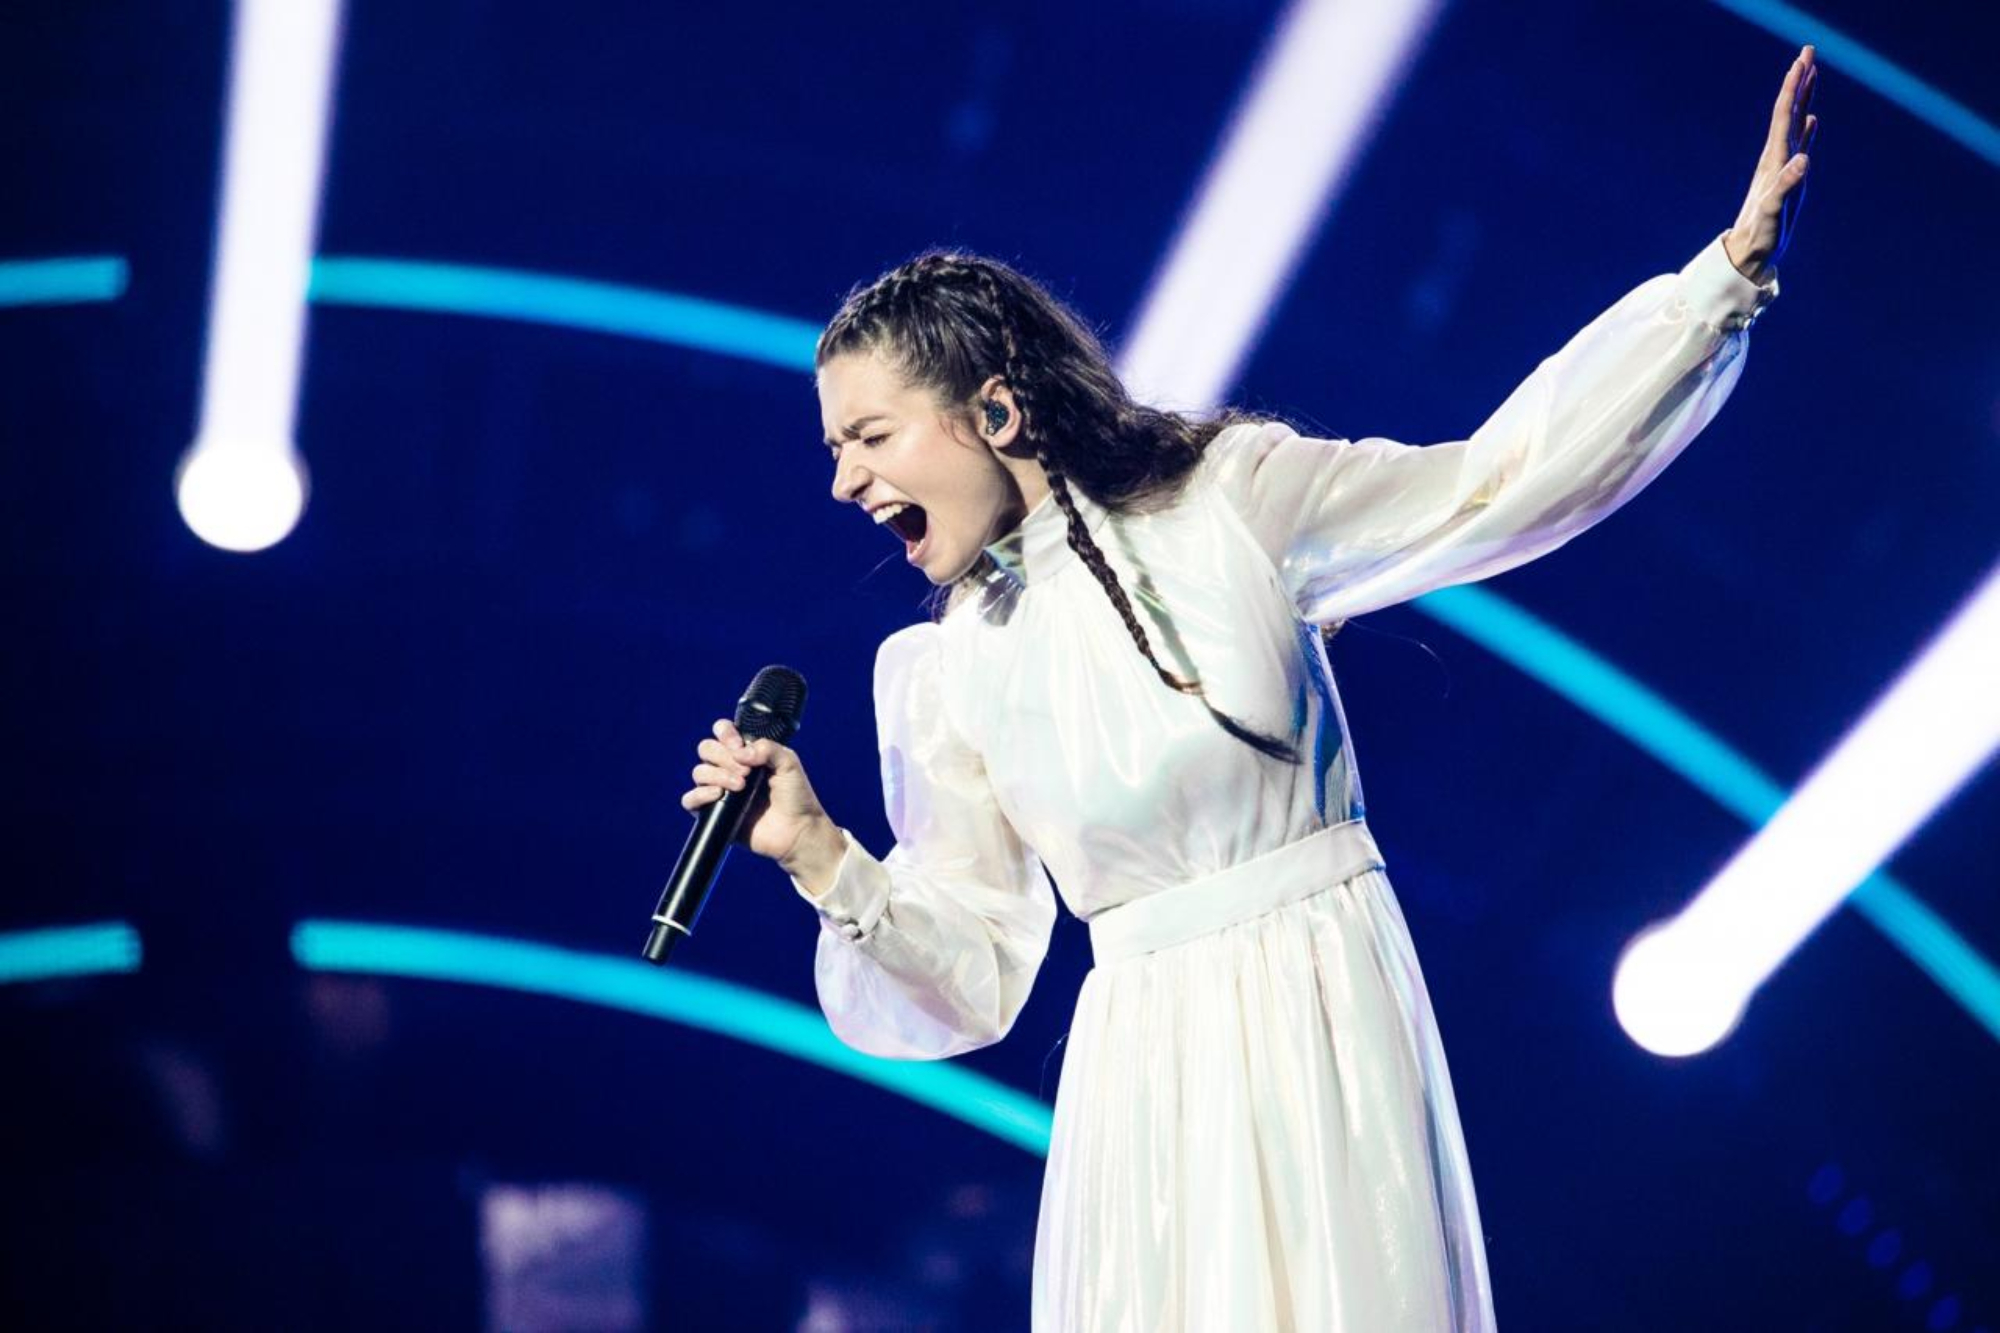 Eurovision 2022: Η ρατσιστική ερώτηση που δέχθηκε η Αμάντα